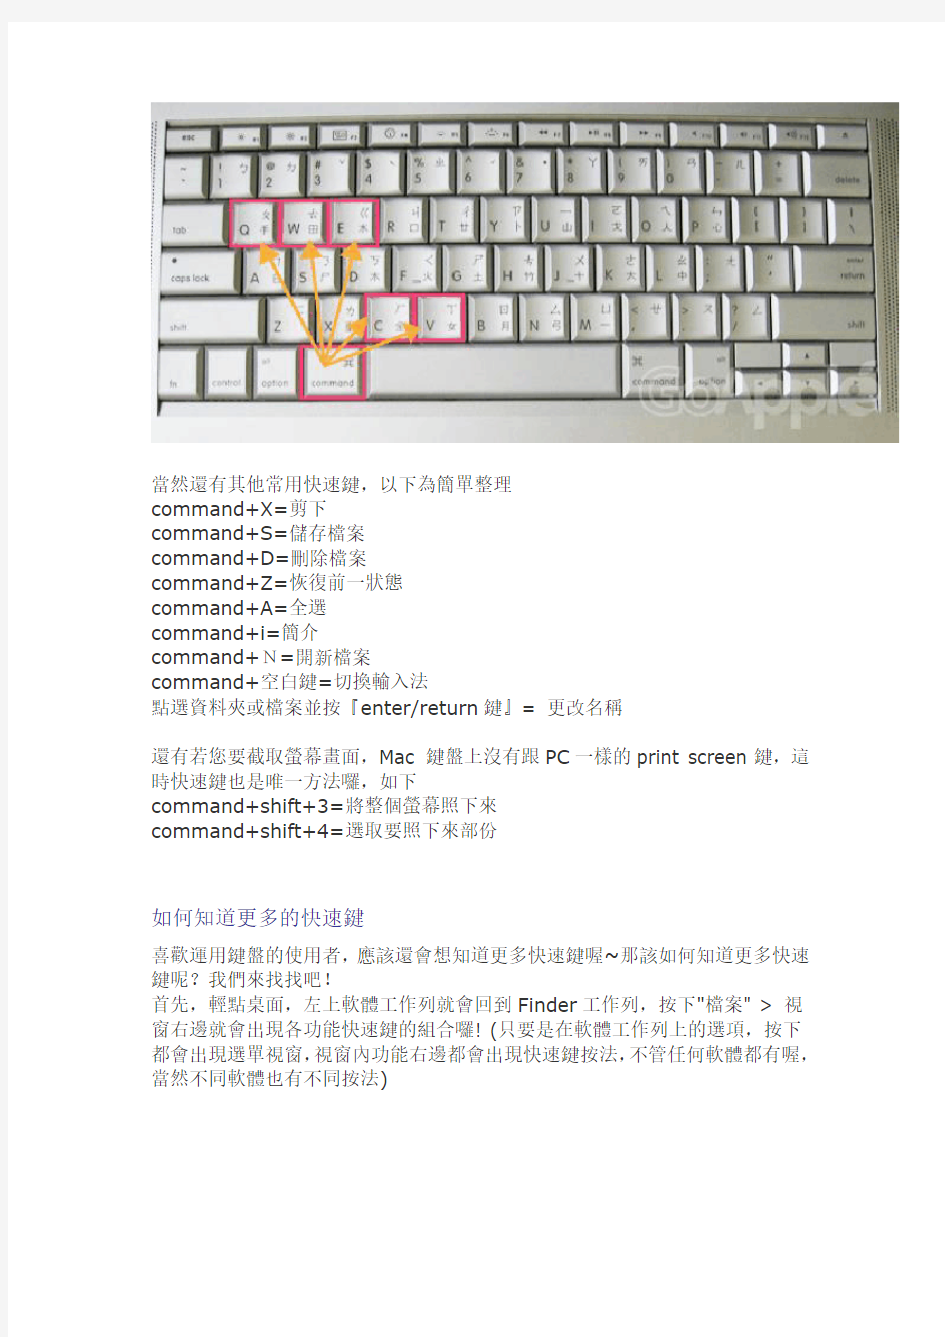 Mac Pro苹果电脑键盘快捷键使用